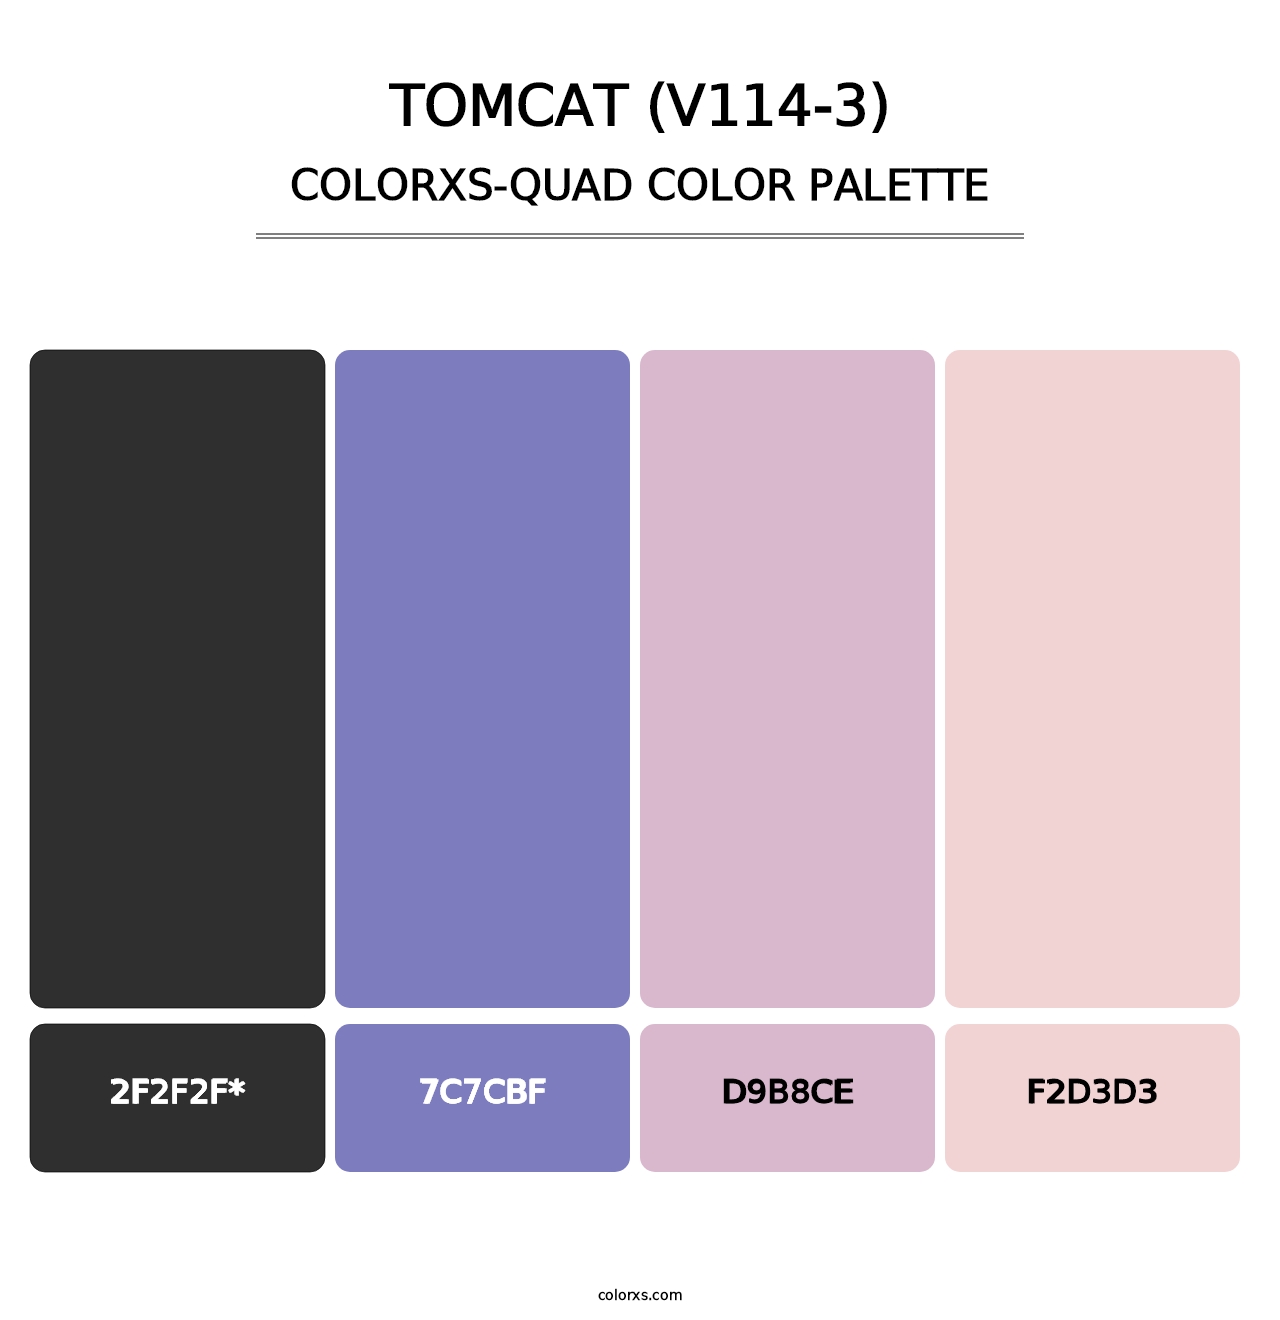 Tomcat (V114-3) - Colorxs Quad Palette